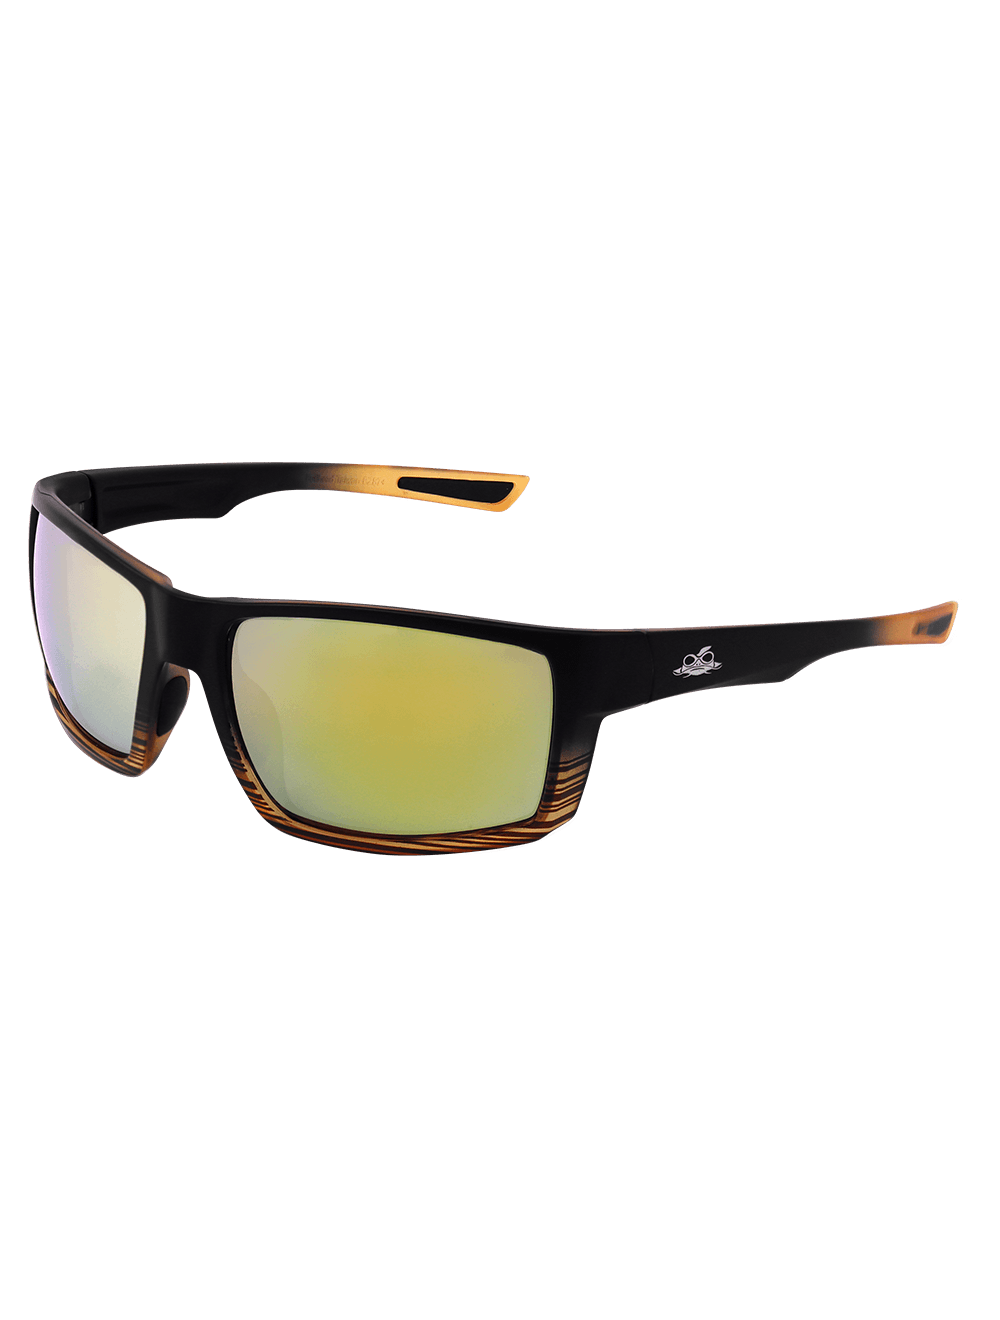 Sawfish™ Gold Mirror Performance Fog Technology Polarized Lens, Tortoise/Black Frame Safety Glasses - BH26719PFT